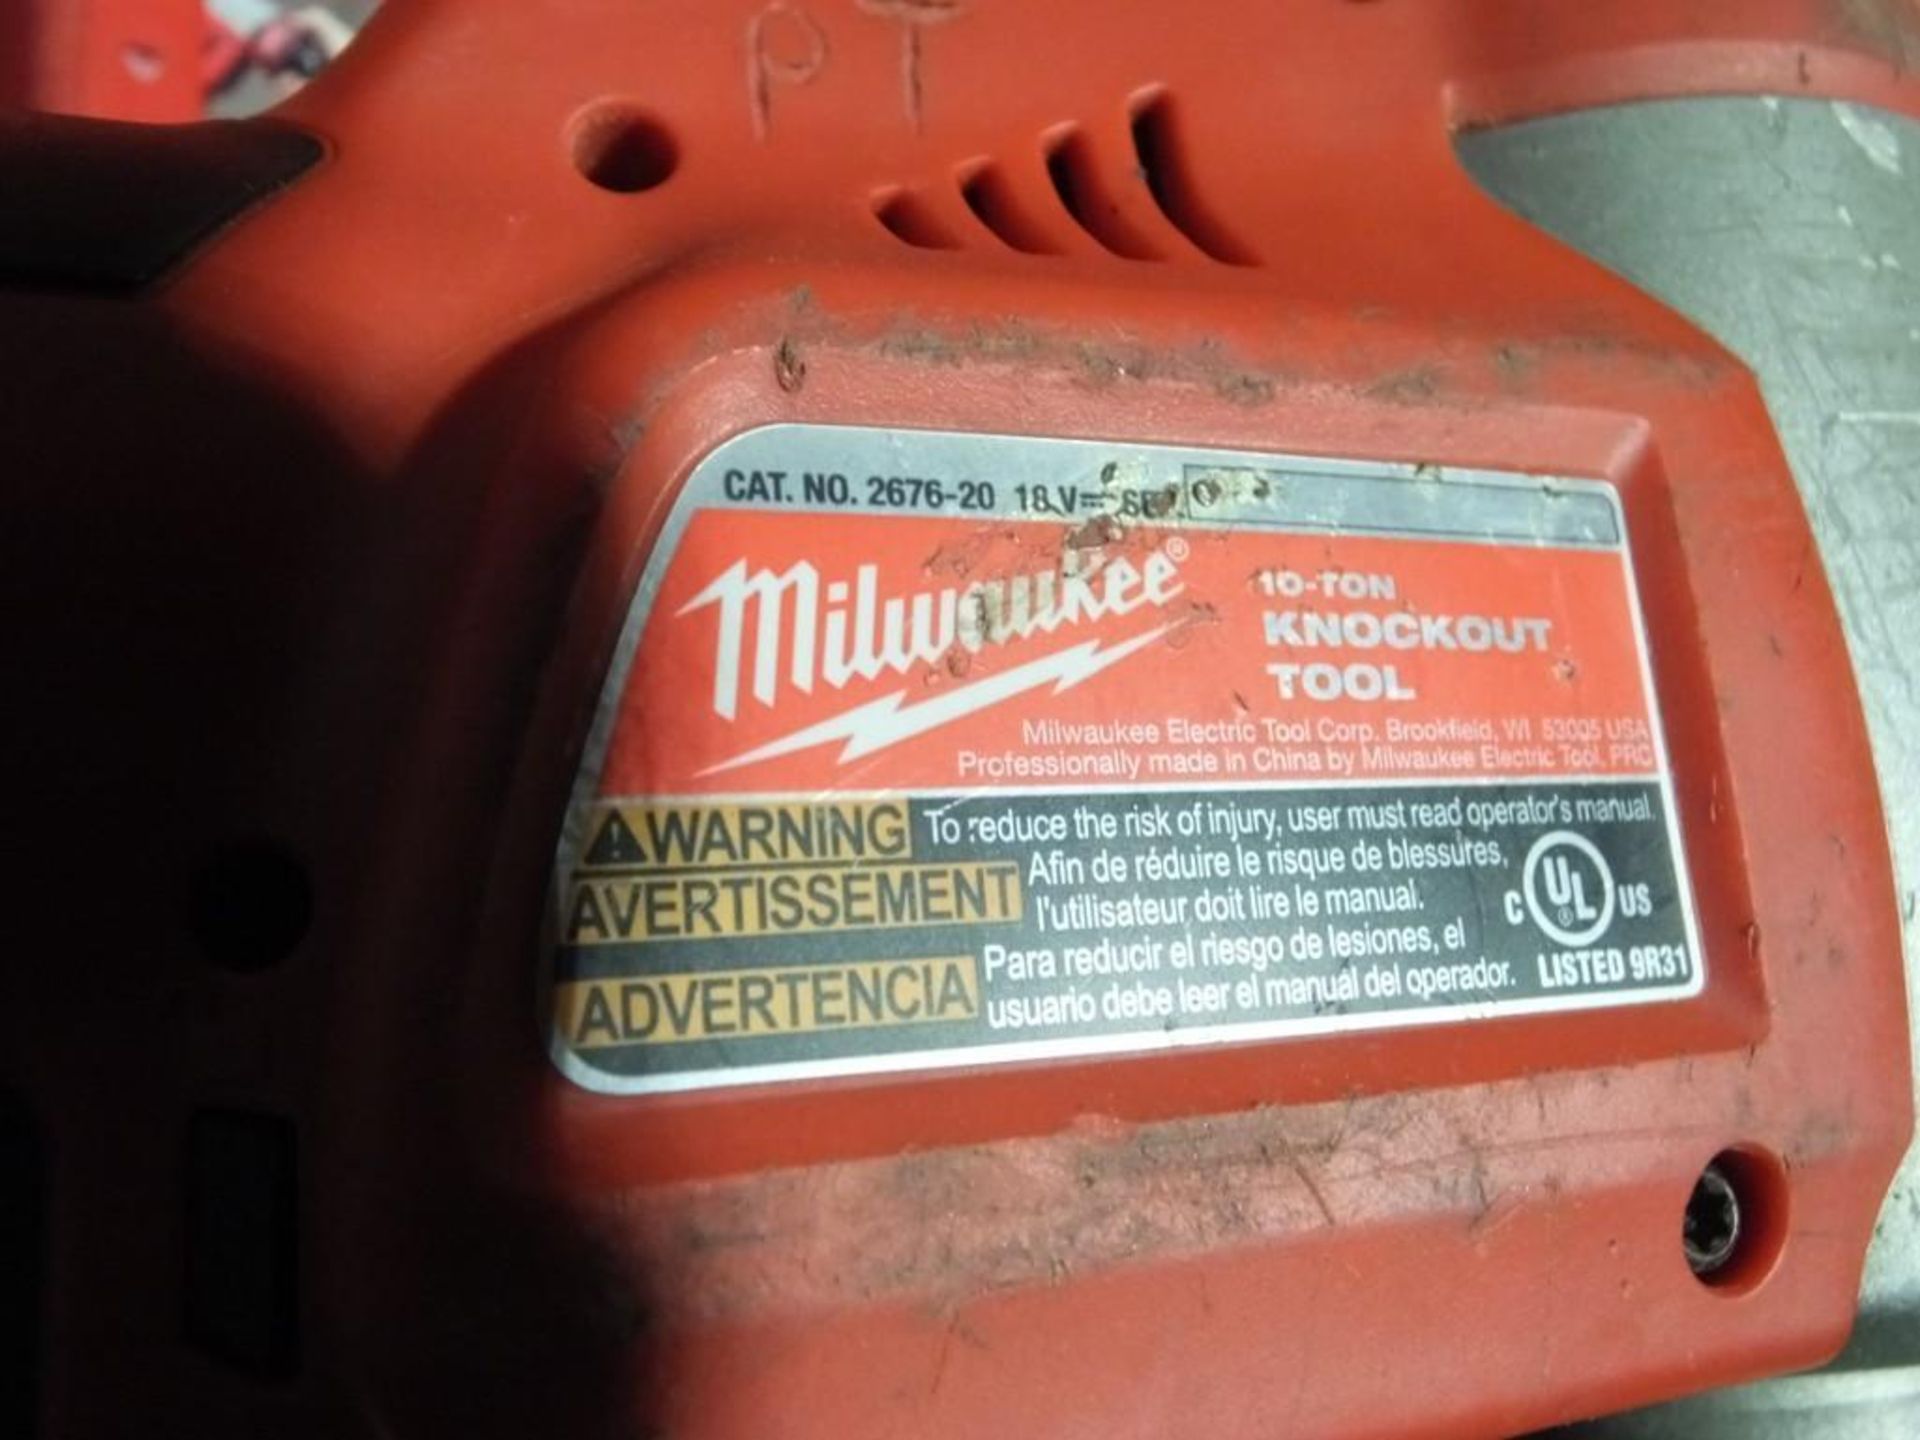 MIlwaukee M18 2676-20 Knockout Tool Kit - Image 2 of 4